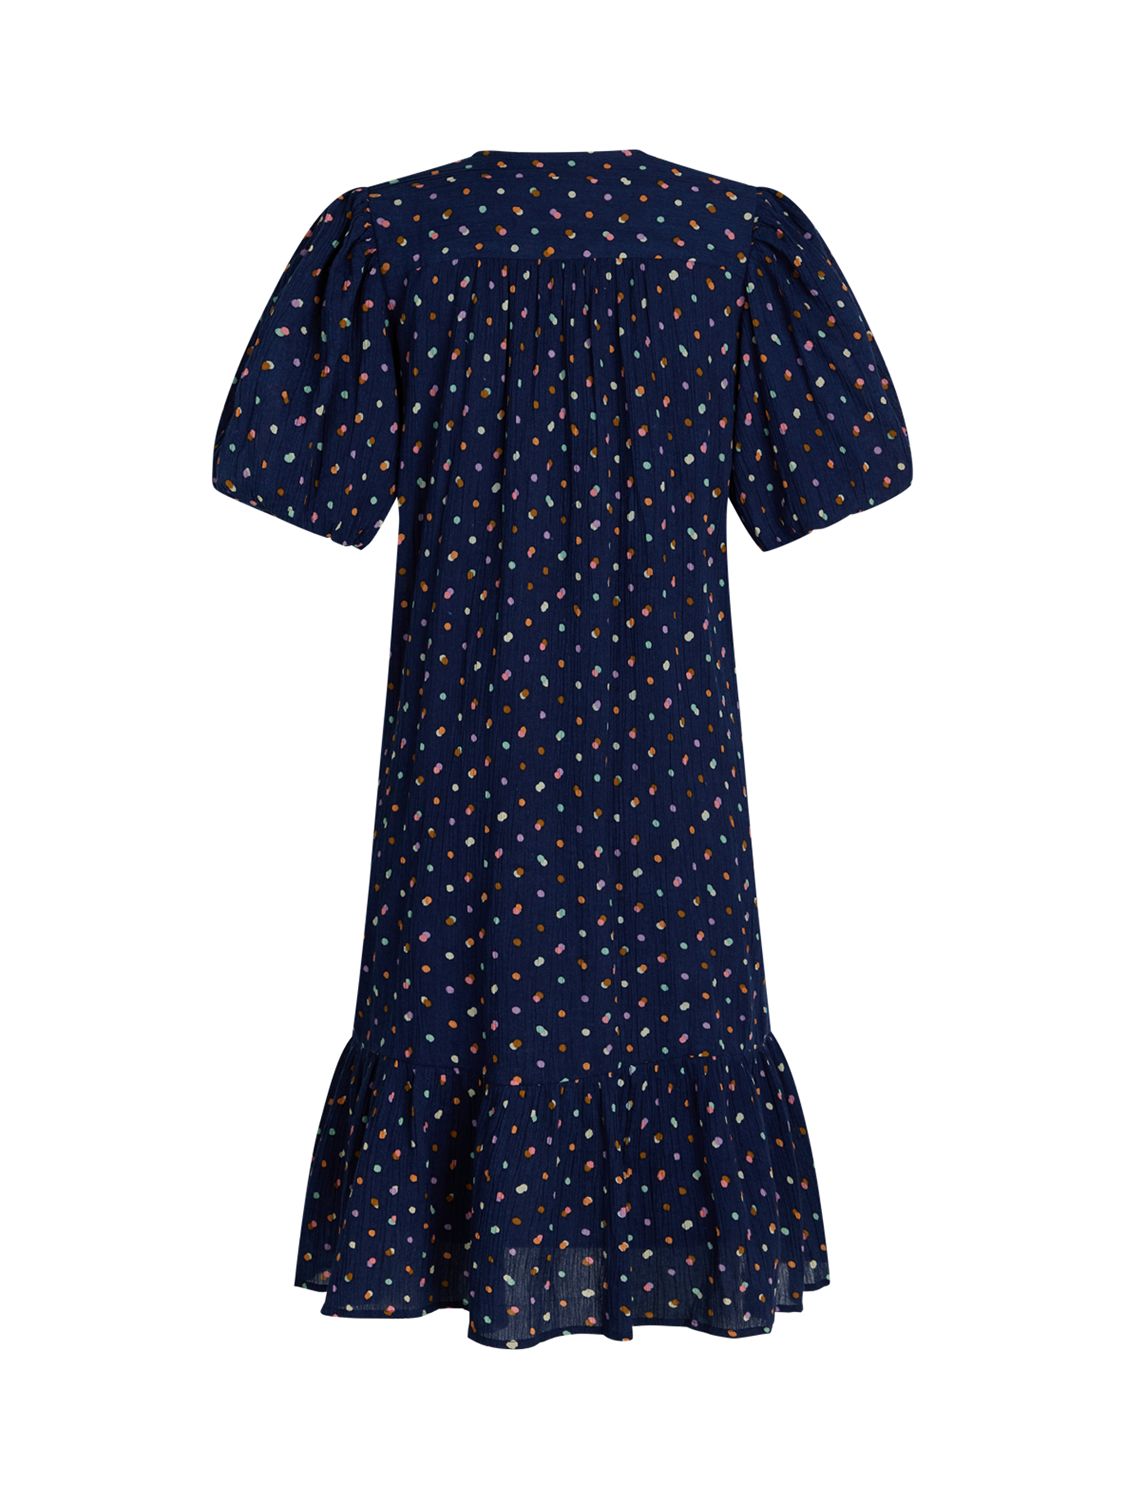 Noa Noa Nikita Short Sleeve Midi Dress, Blue/Multi, 8